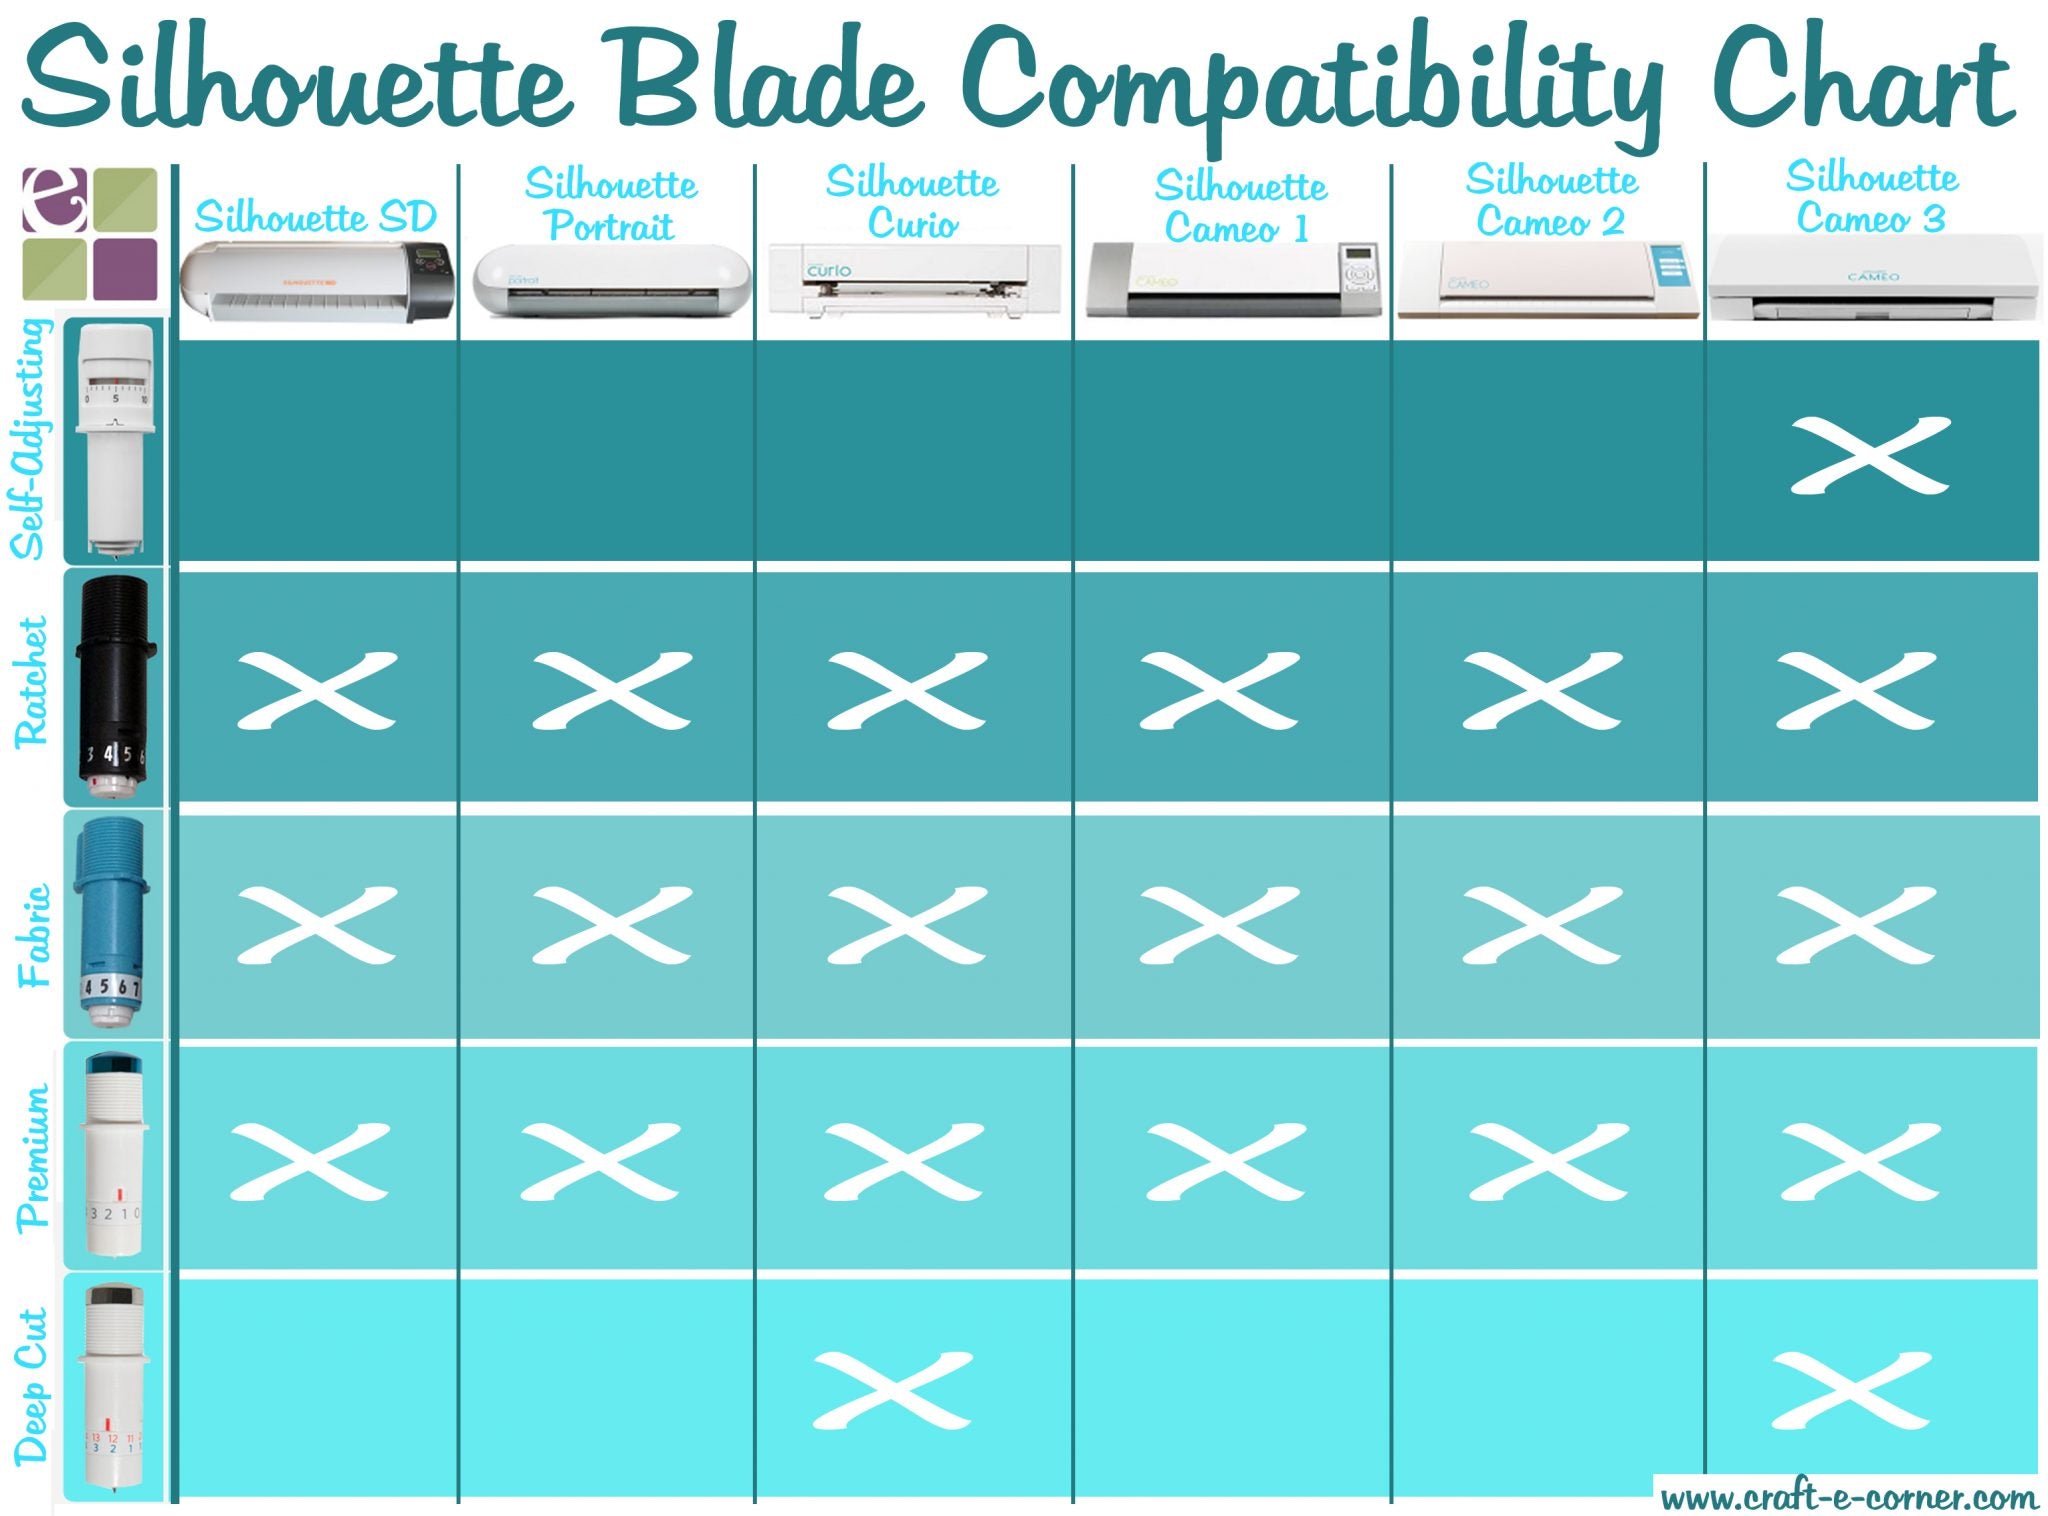 Silhouette UK: Silhouette Basics - Masterclass on Blades